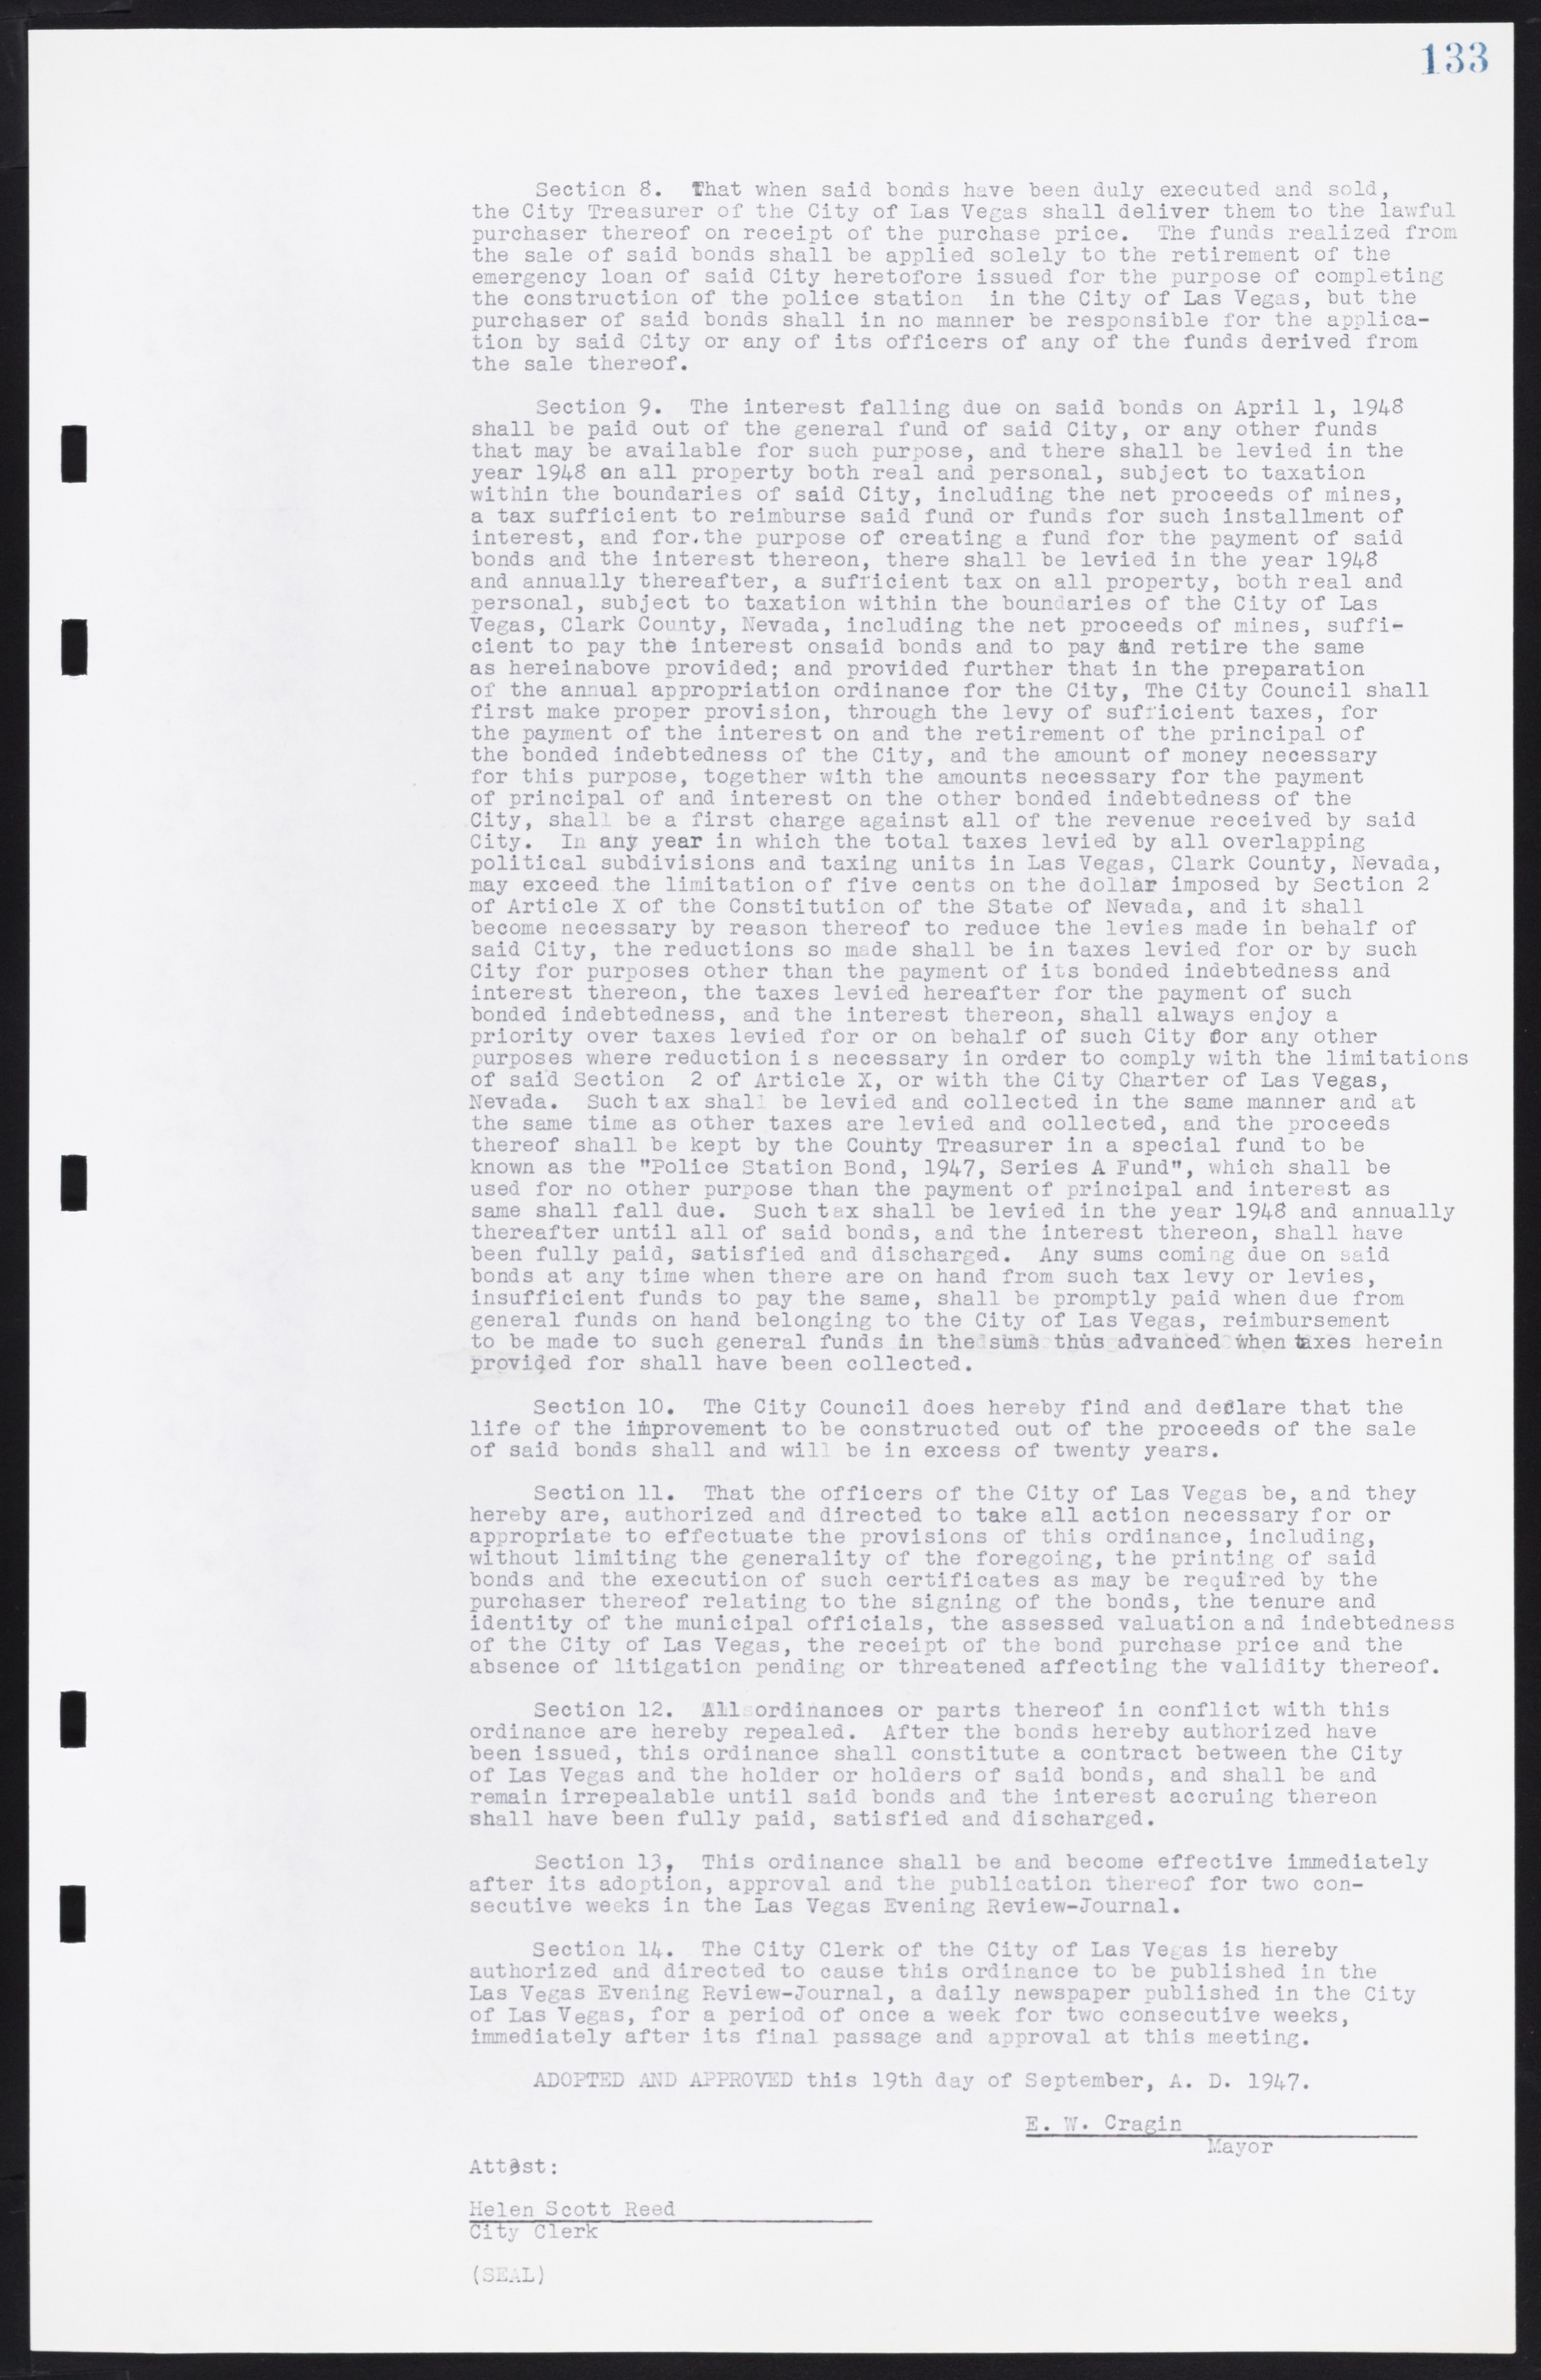 Las Vegas City Commission Minutes, January 7, 1947 to October 26, 1949, lvc000006-151